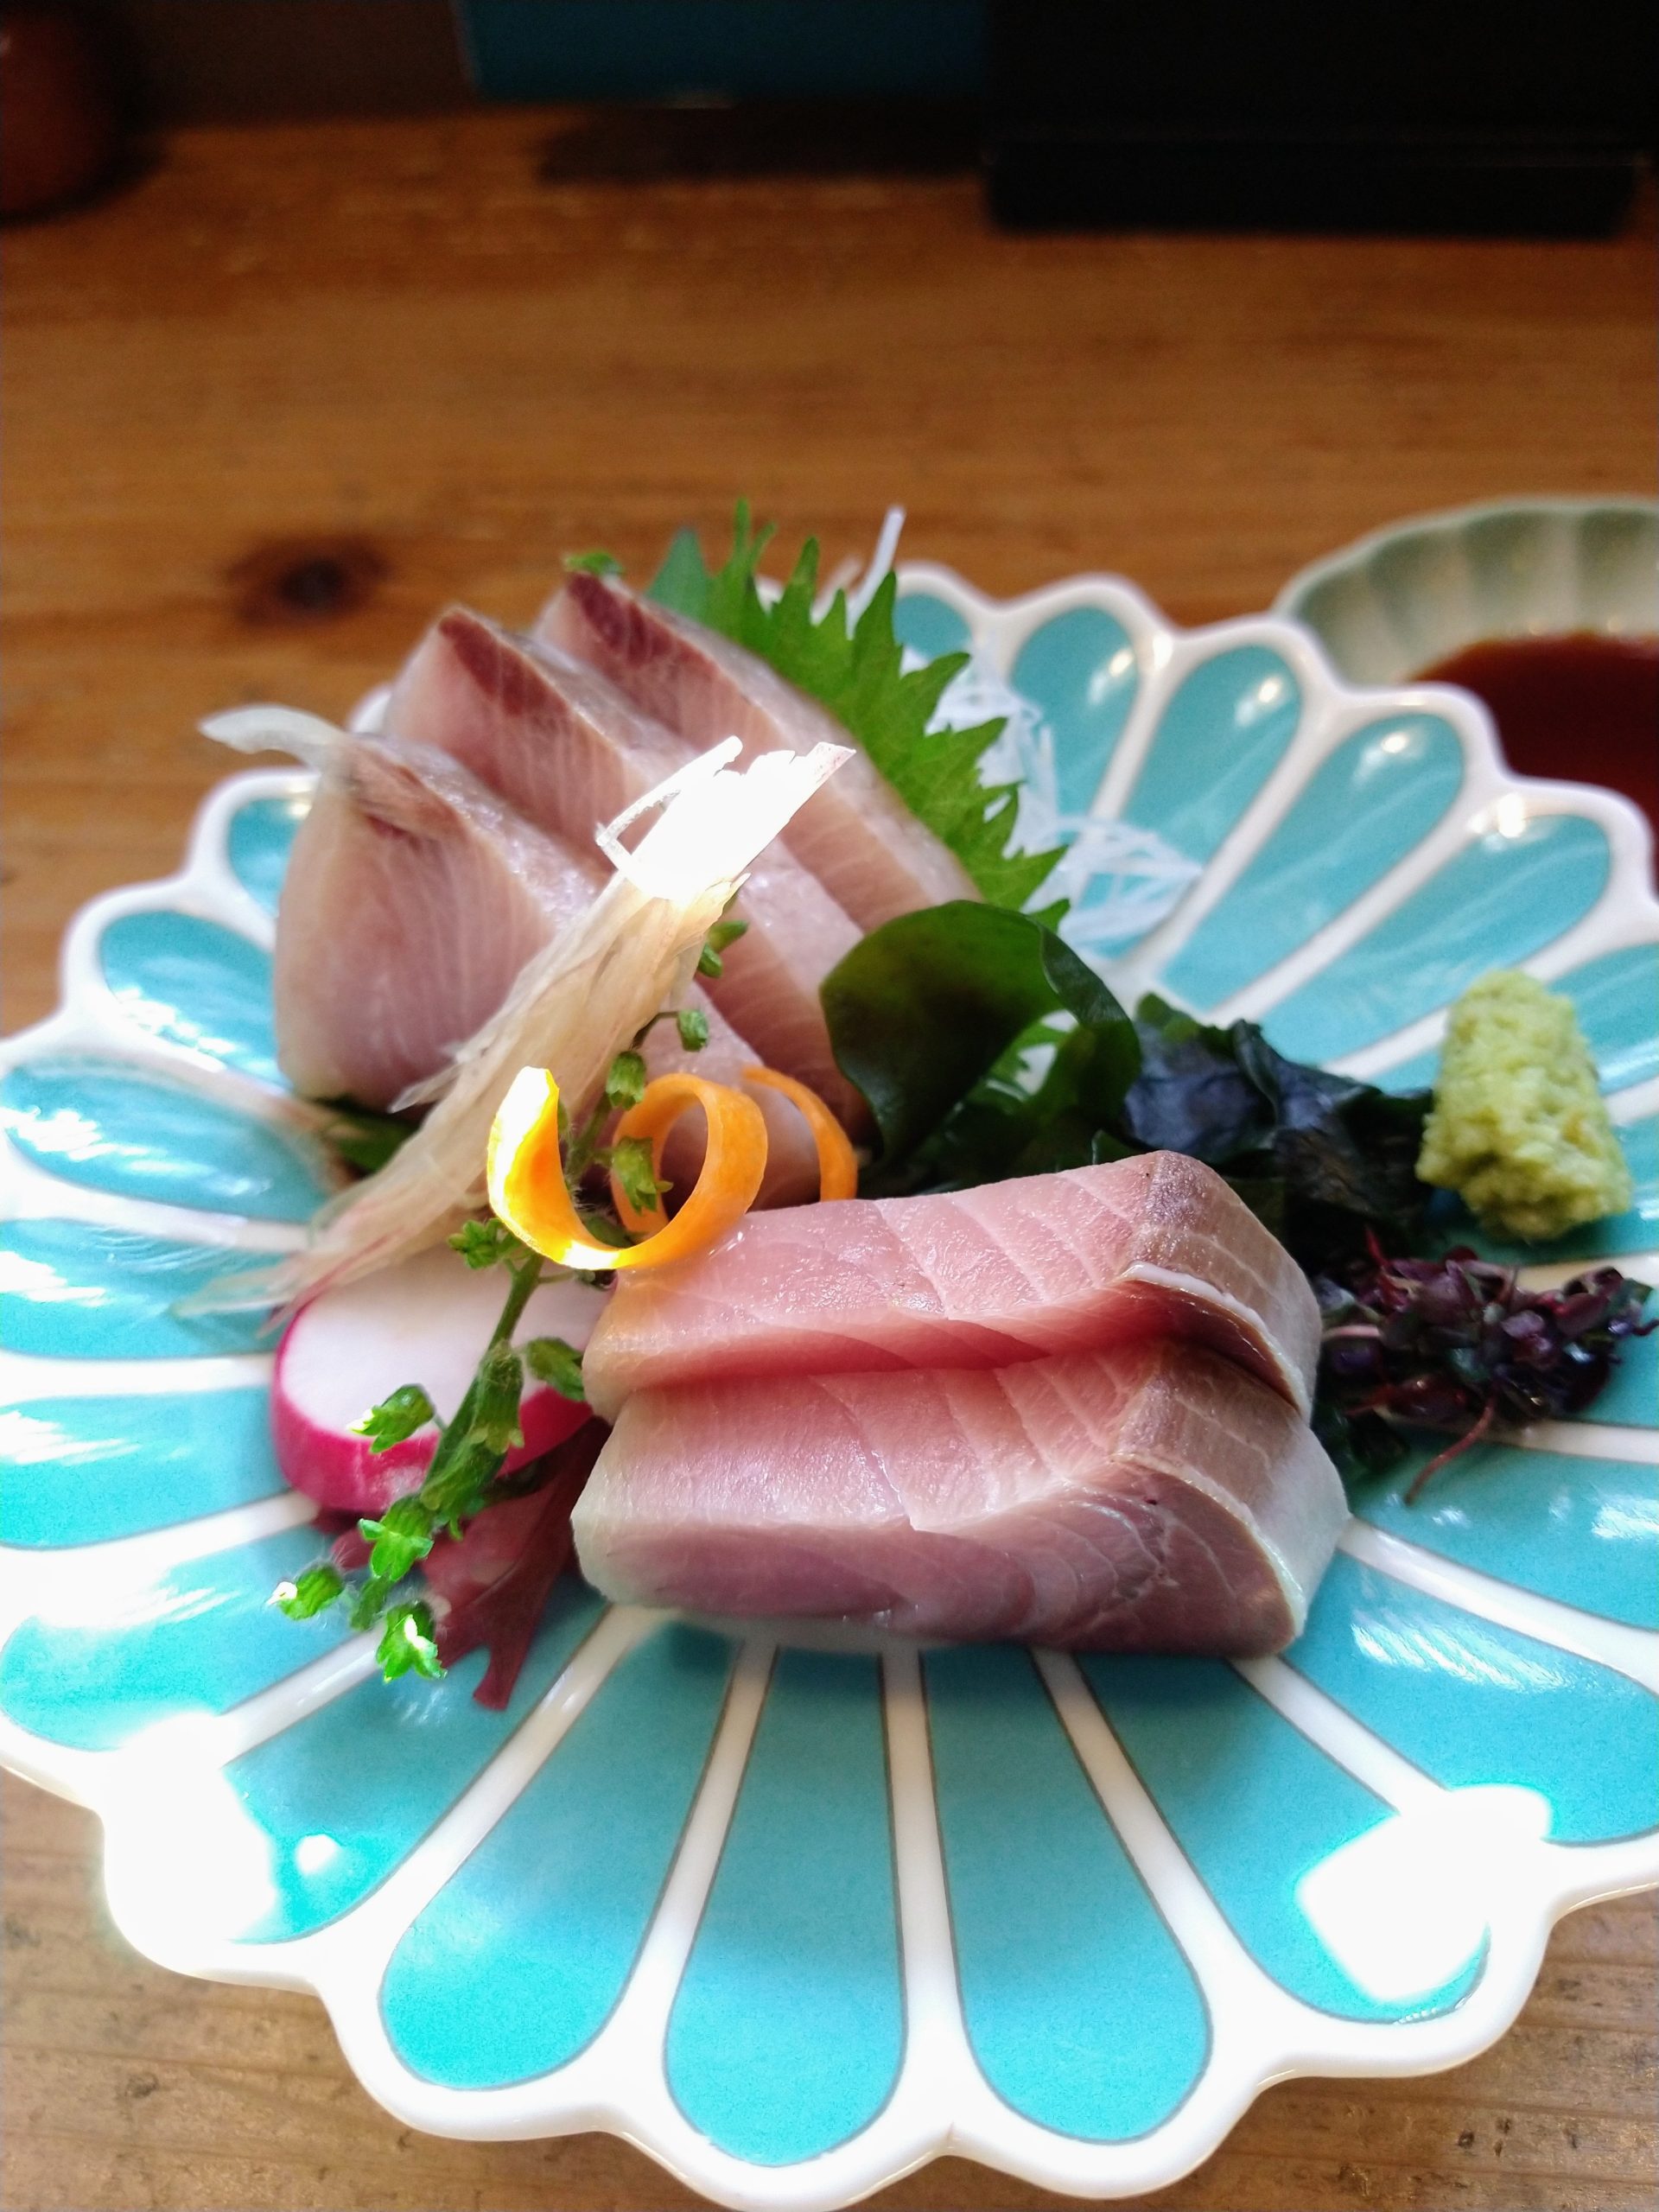 sengawa-soba-ishihara-cuisine-138